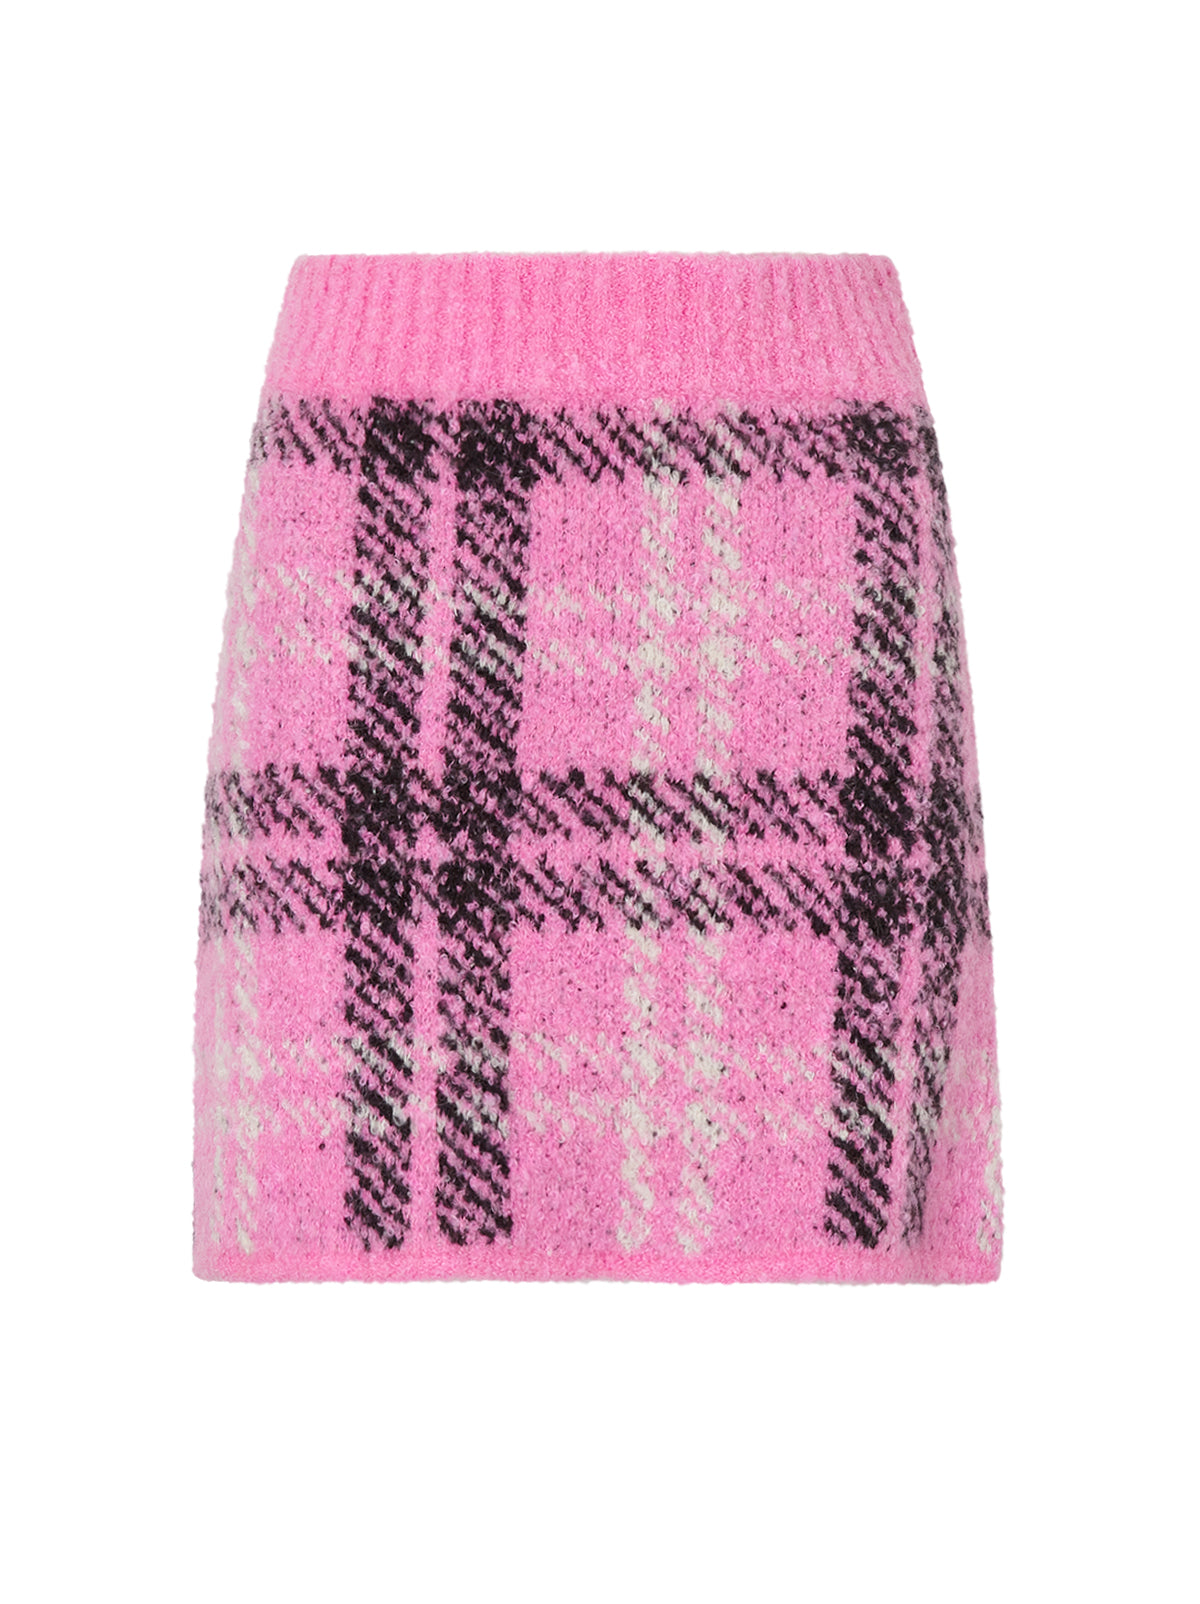 Susan Pink Check Boucle Knit Mini Skirt By KITRI Studio